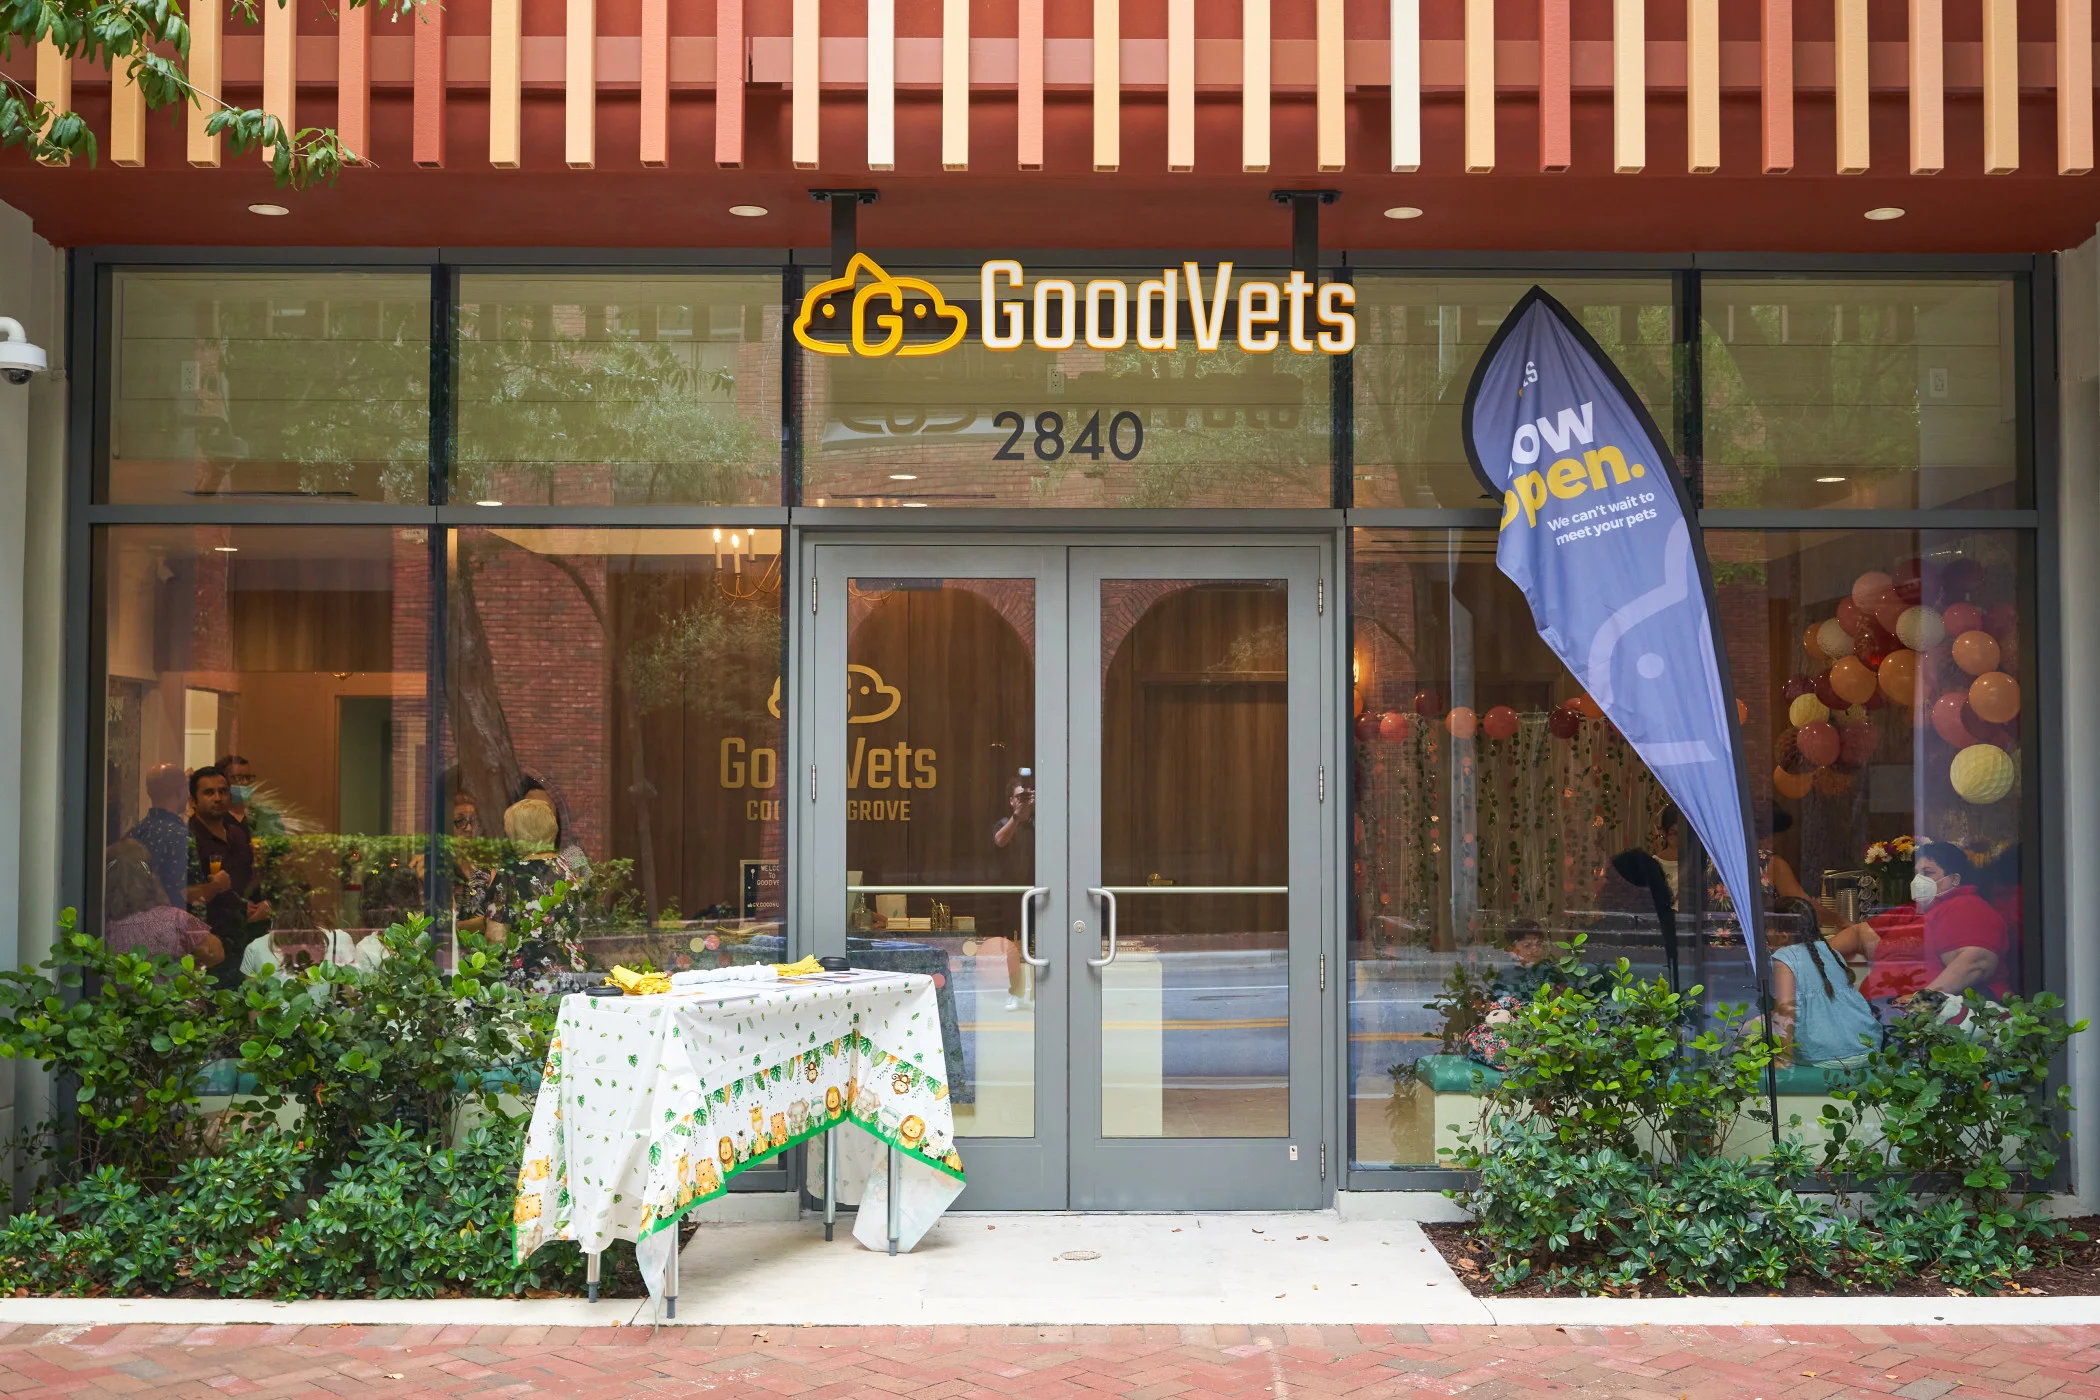 Exterior building and front door of GoodVets Pet clinic.